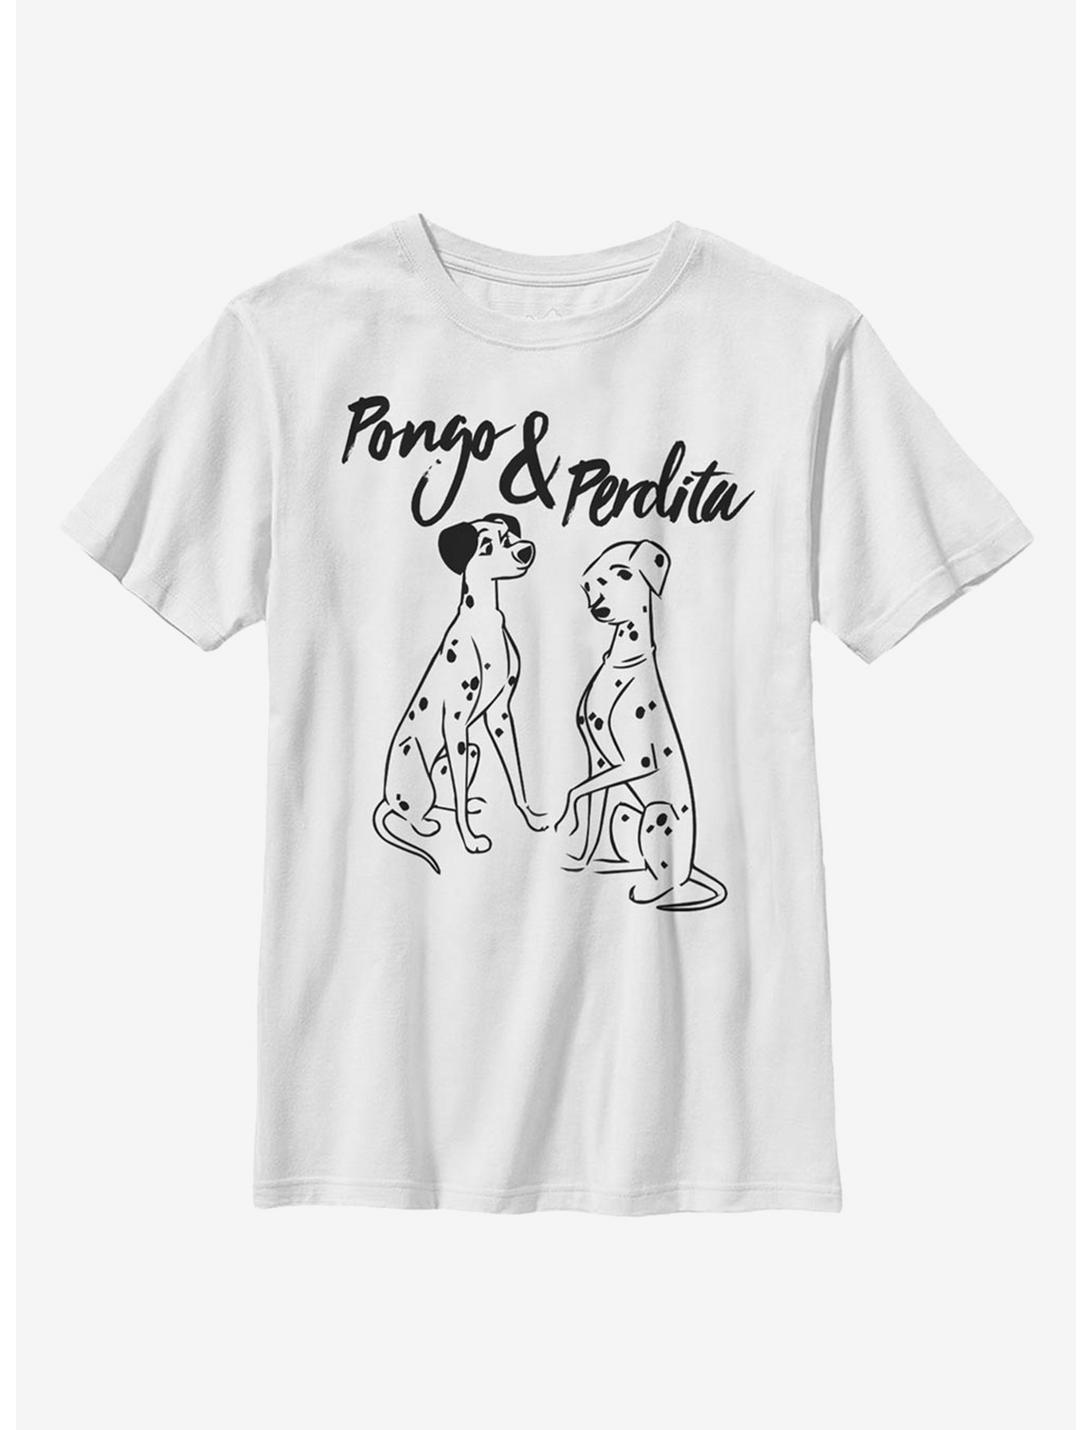 Disney Girls 101 Dalmatians Classic Pongo and Perdita T-Shirt